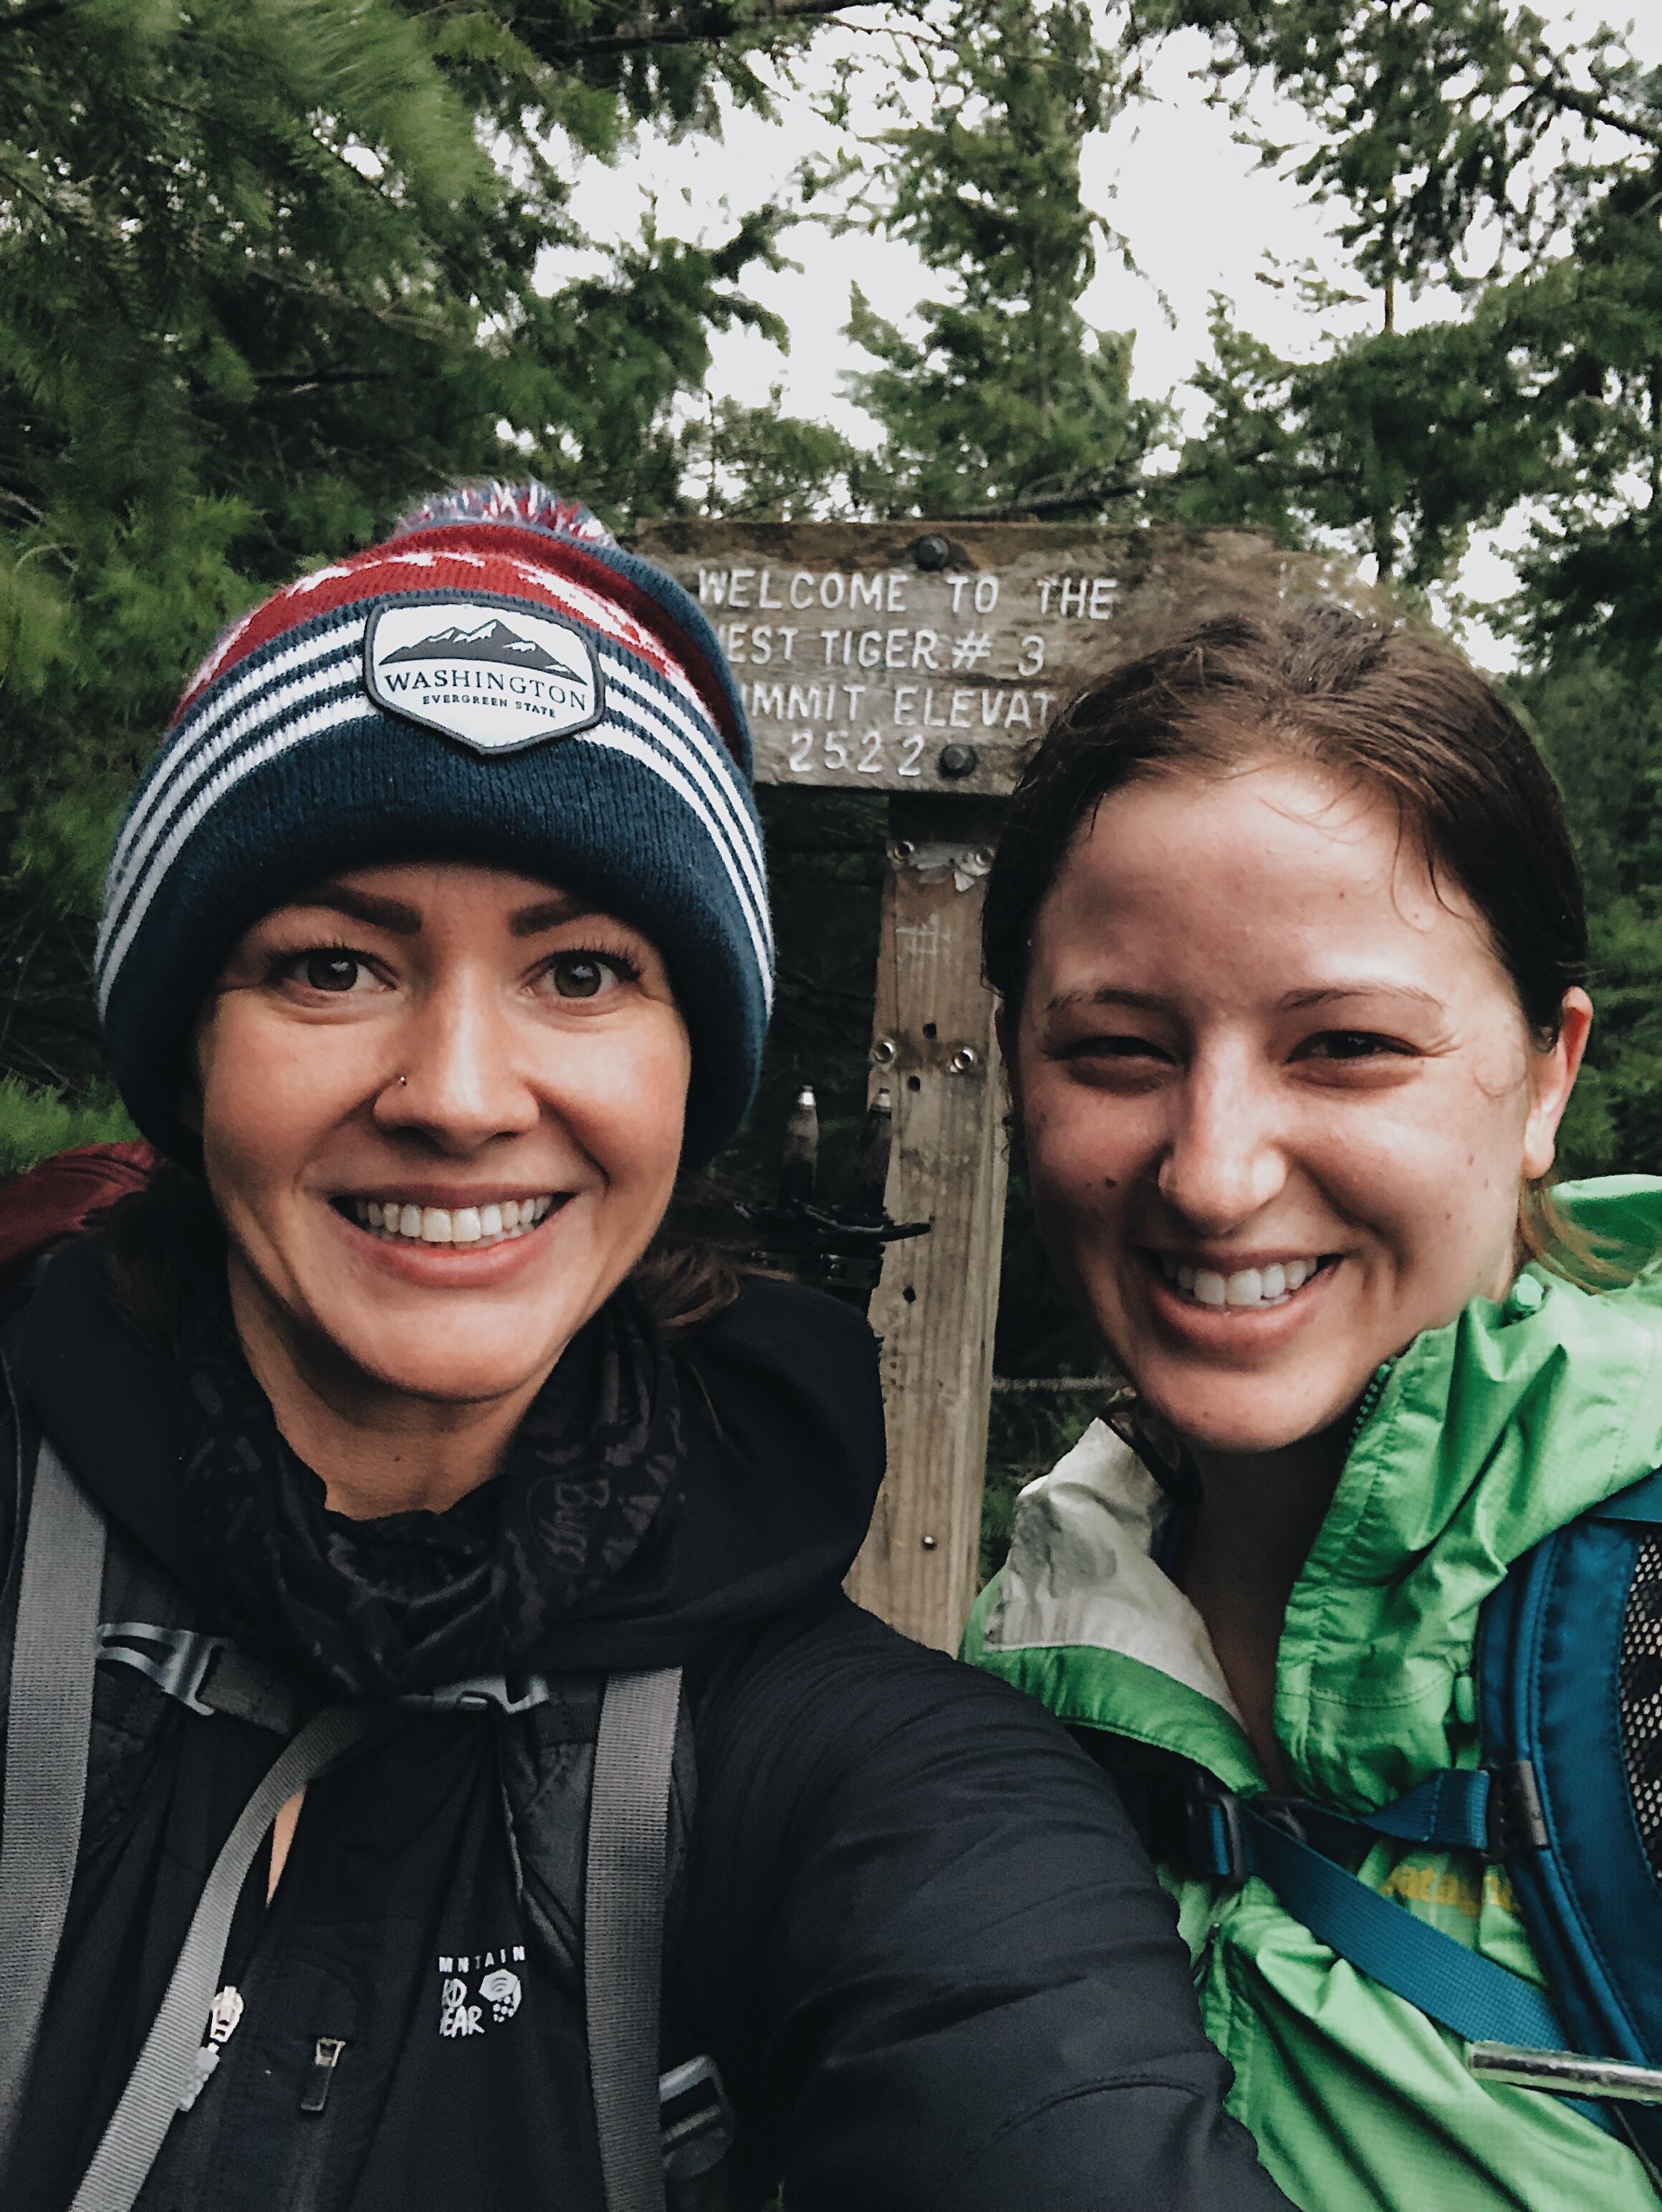  Mount Rainier wedding photographer, Jessi Cavey,&nbsp;hikes West Tiger Trail in Washington. 